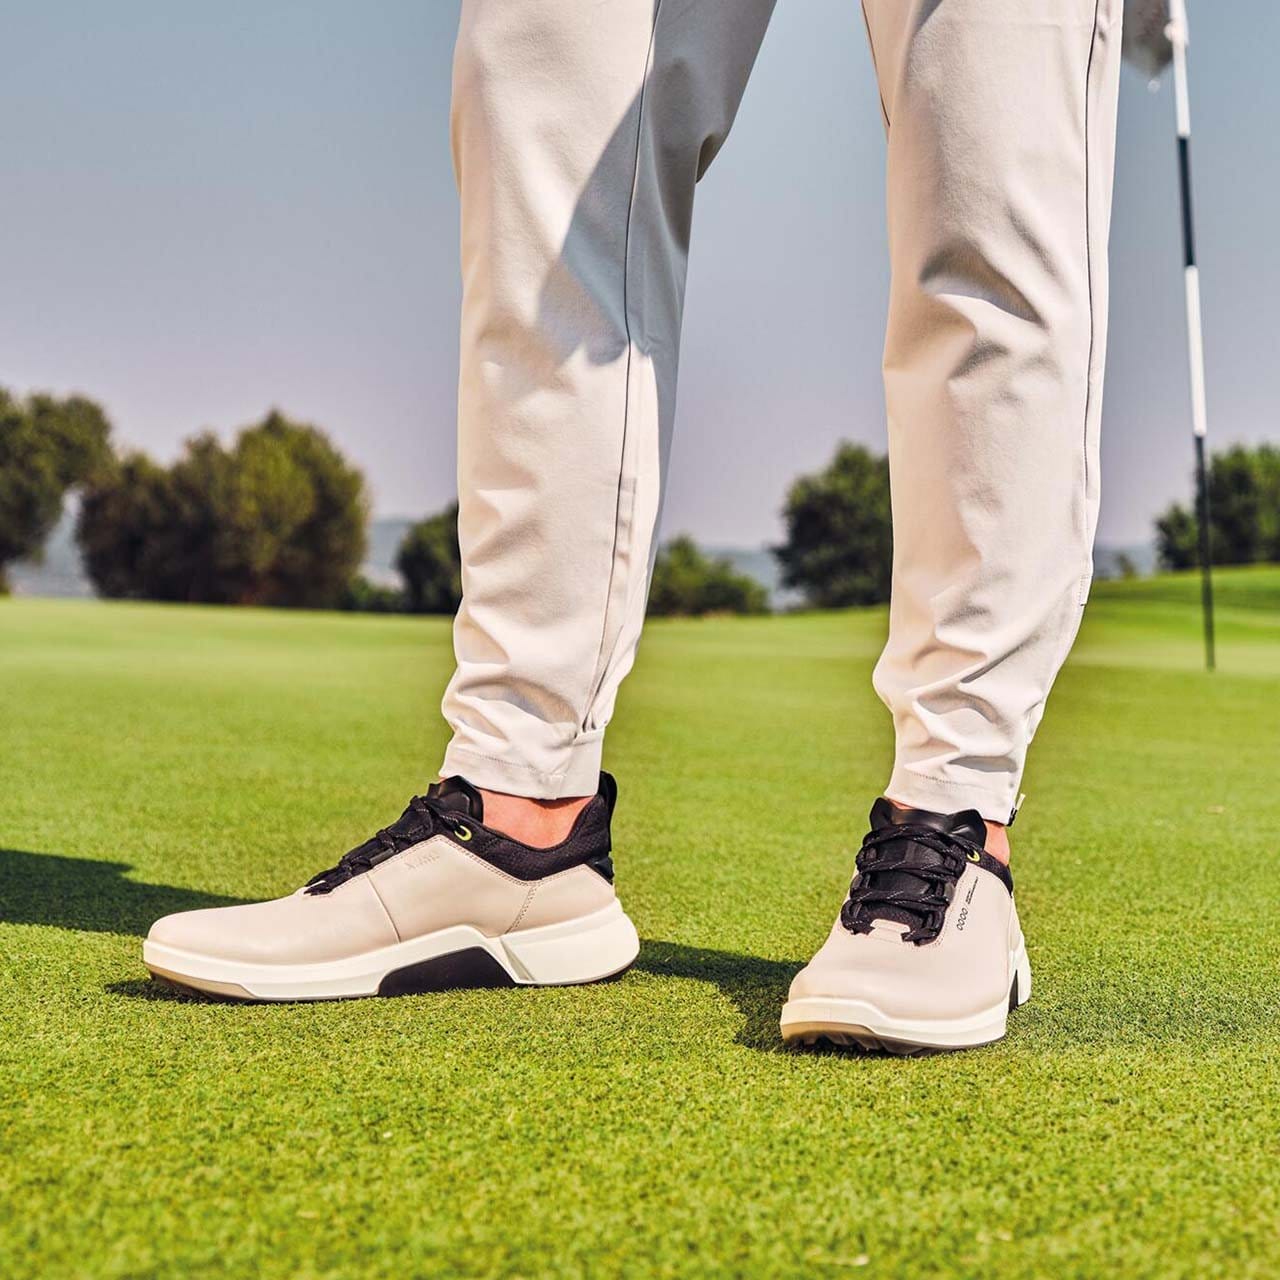 Model wearing golf shoes